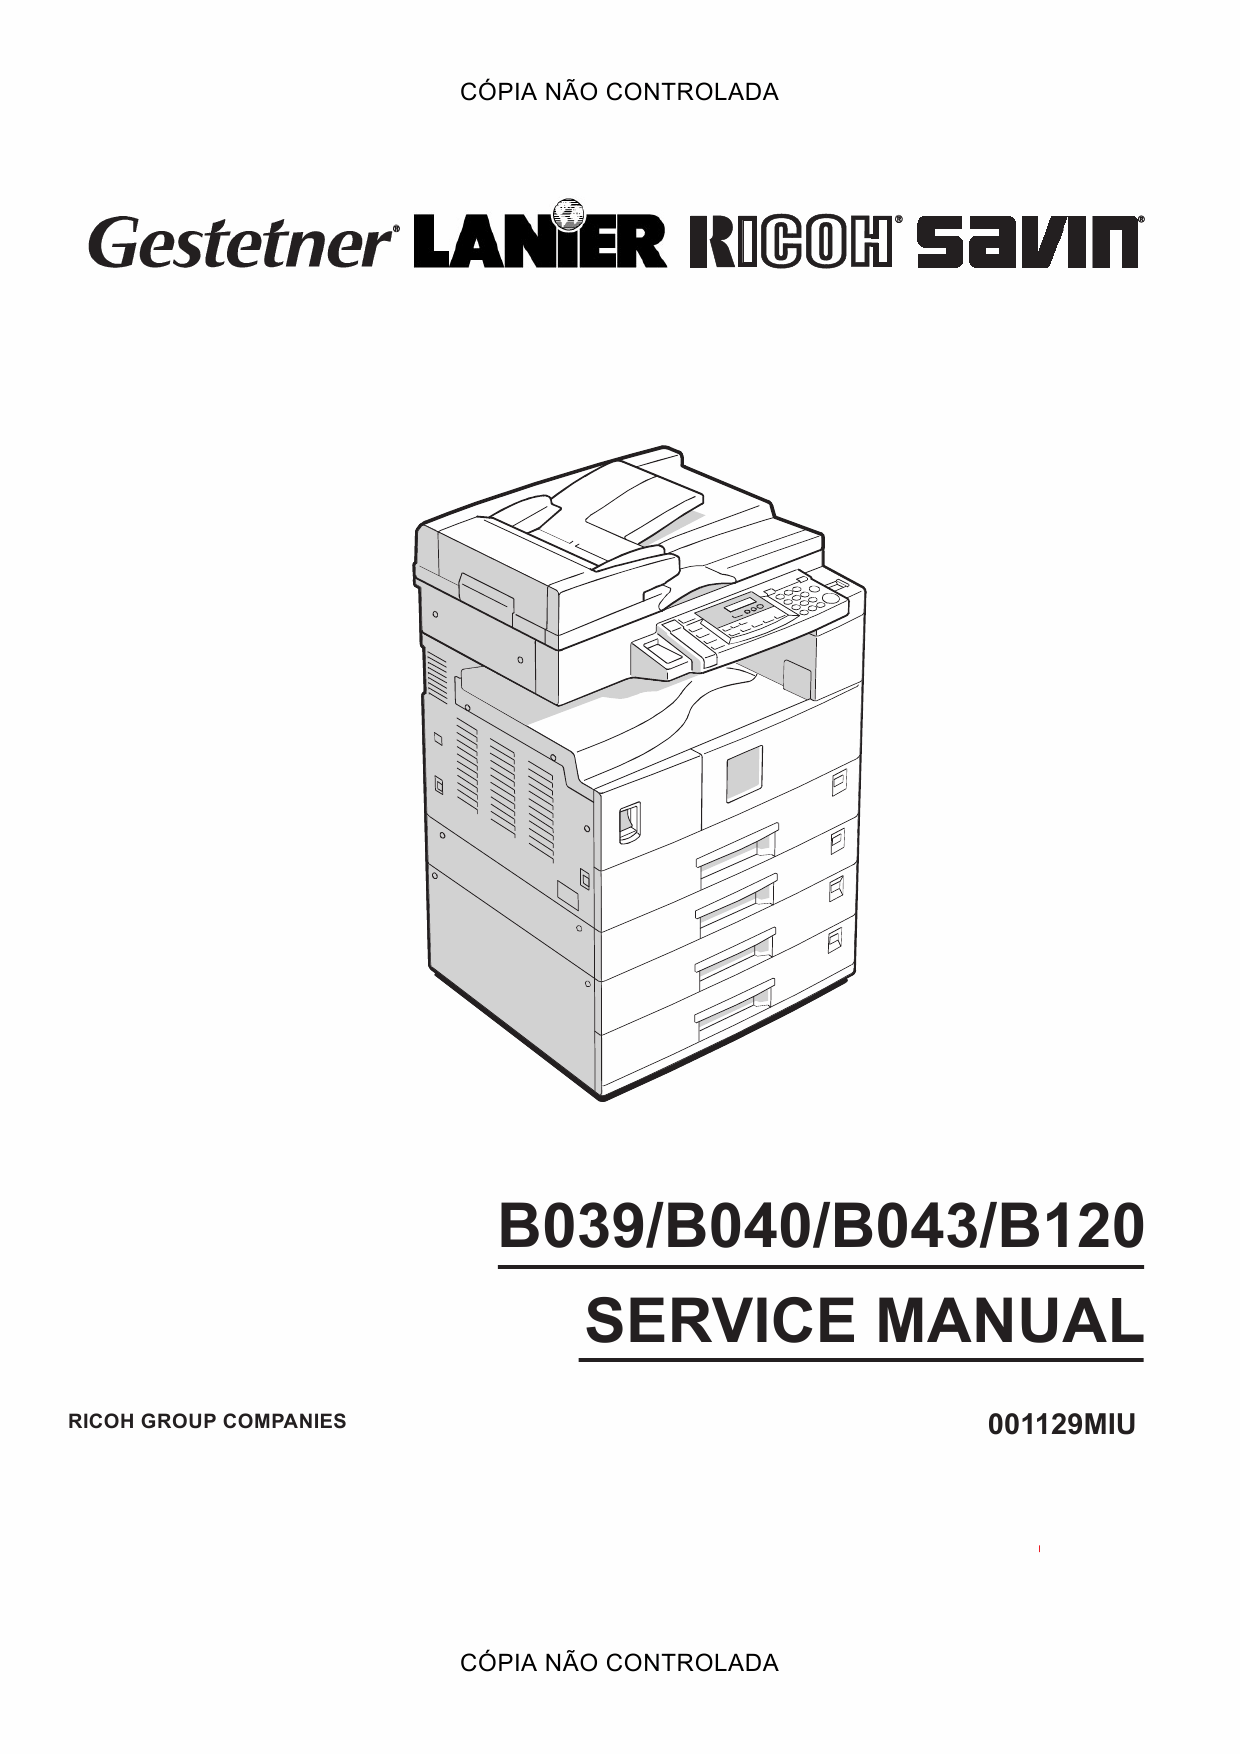 RICOH Aficio 1113 B120 Service Manual-1